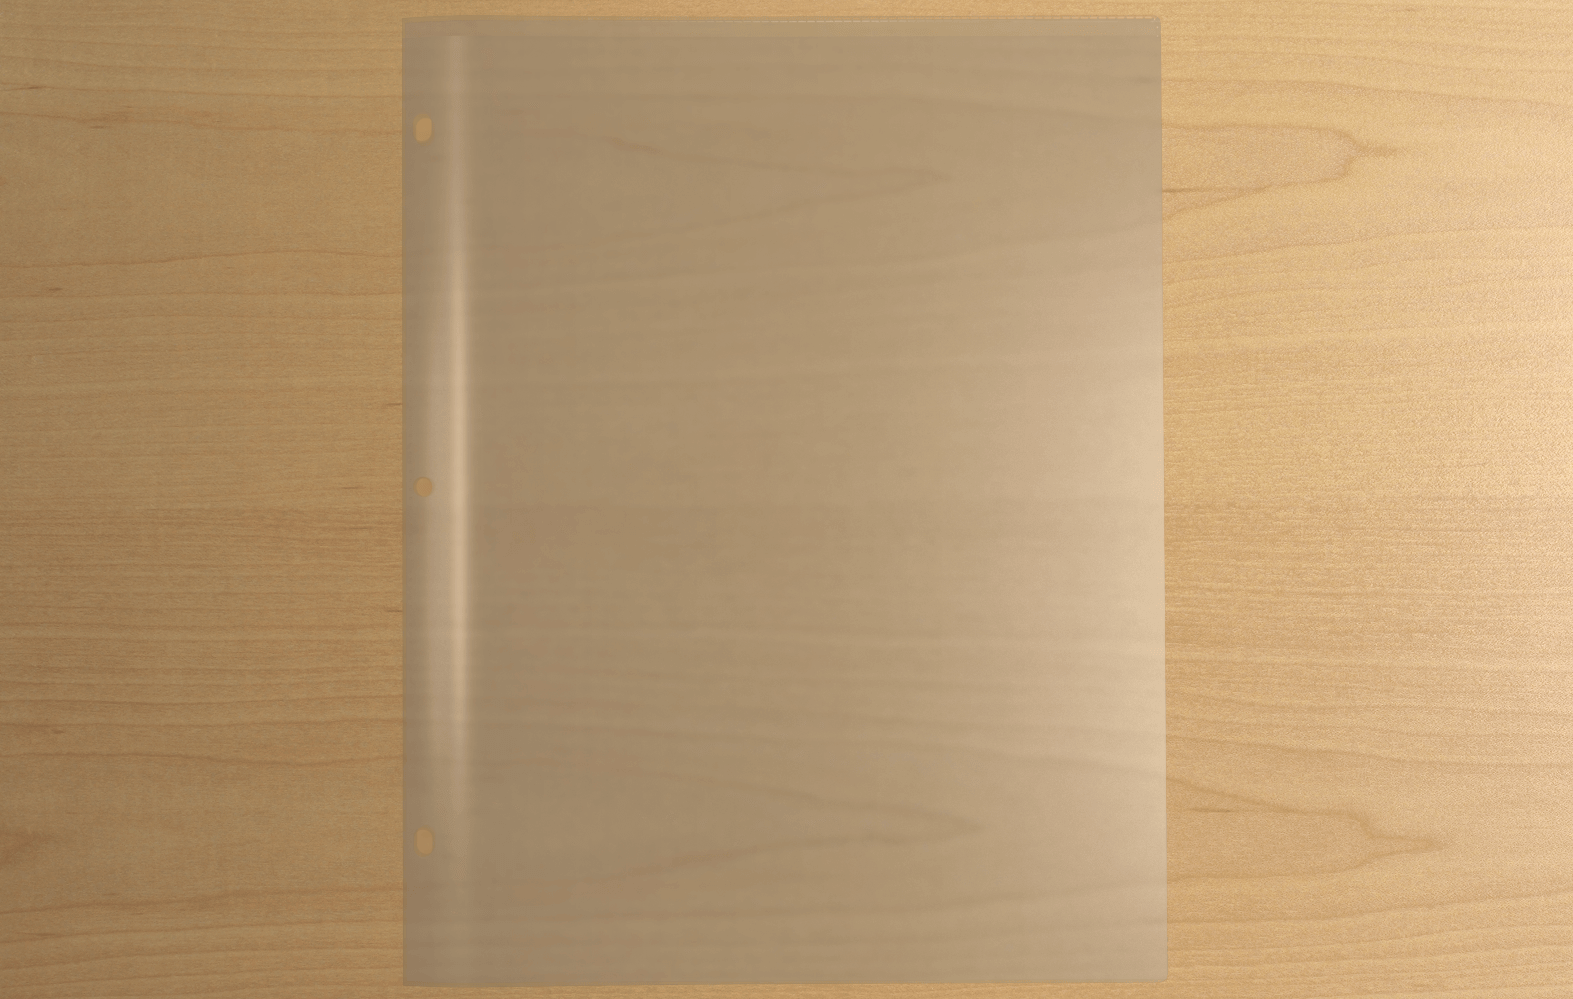 Nicky's® 8-Pocket Plastic Folder